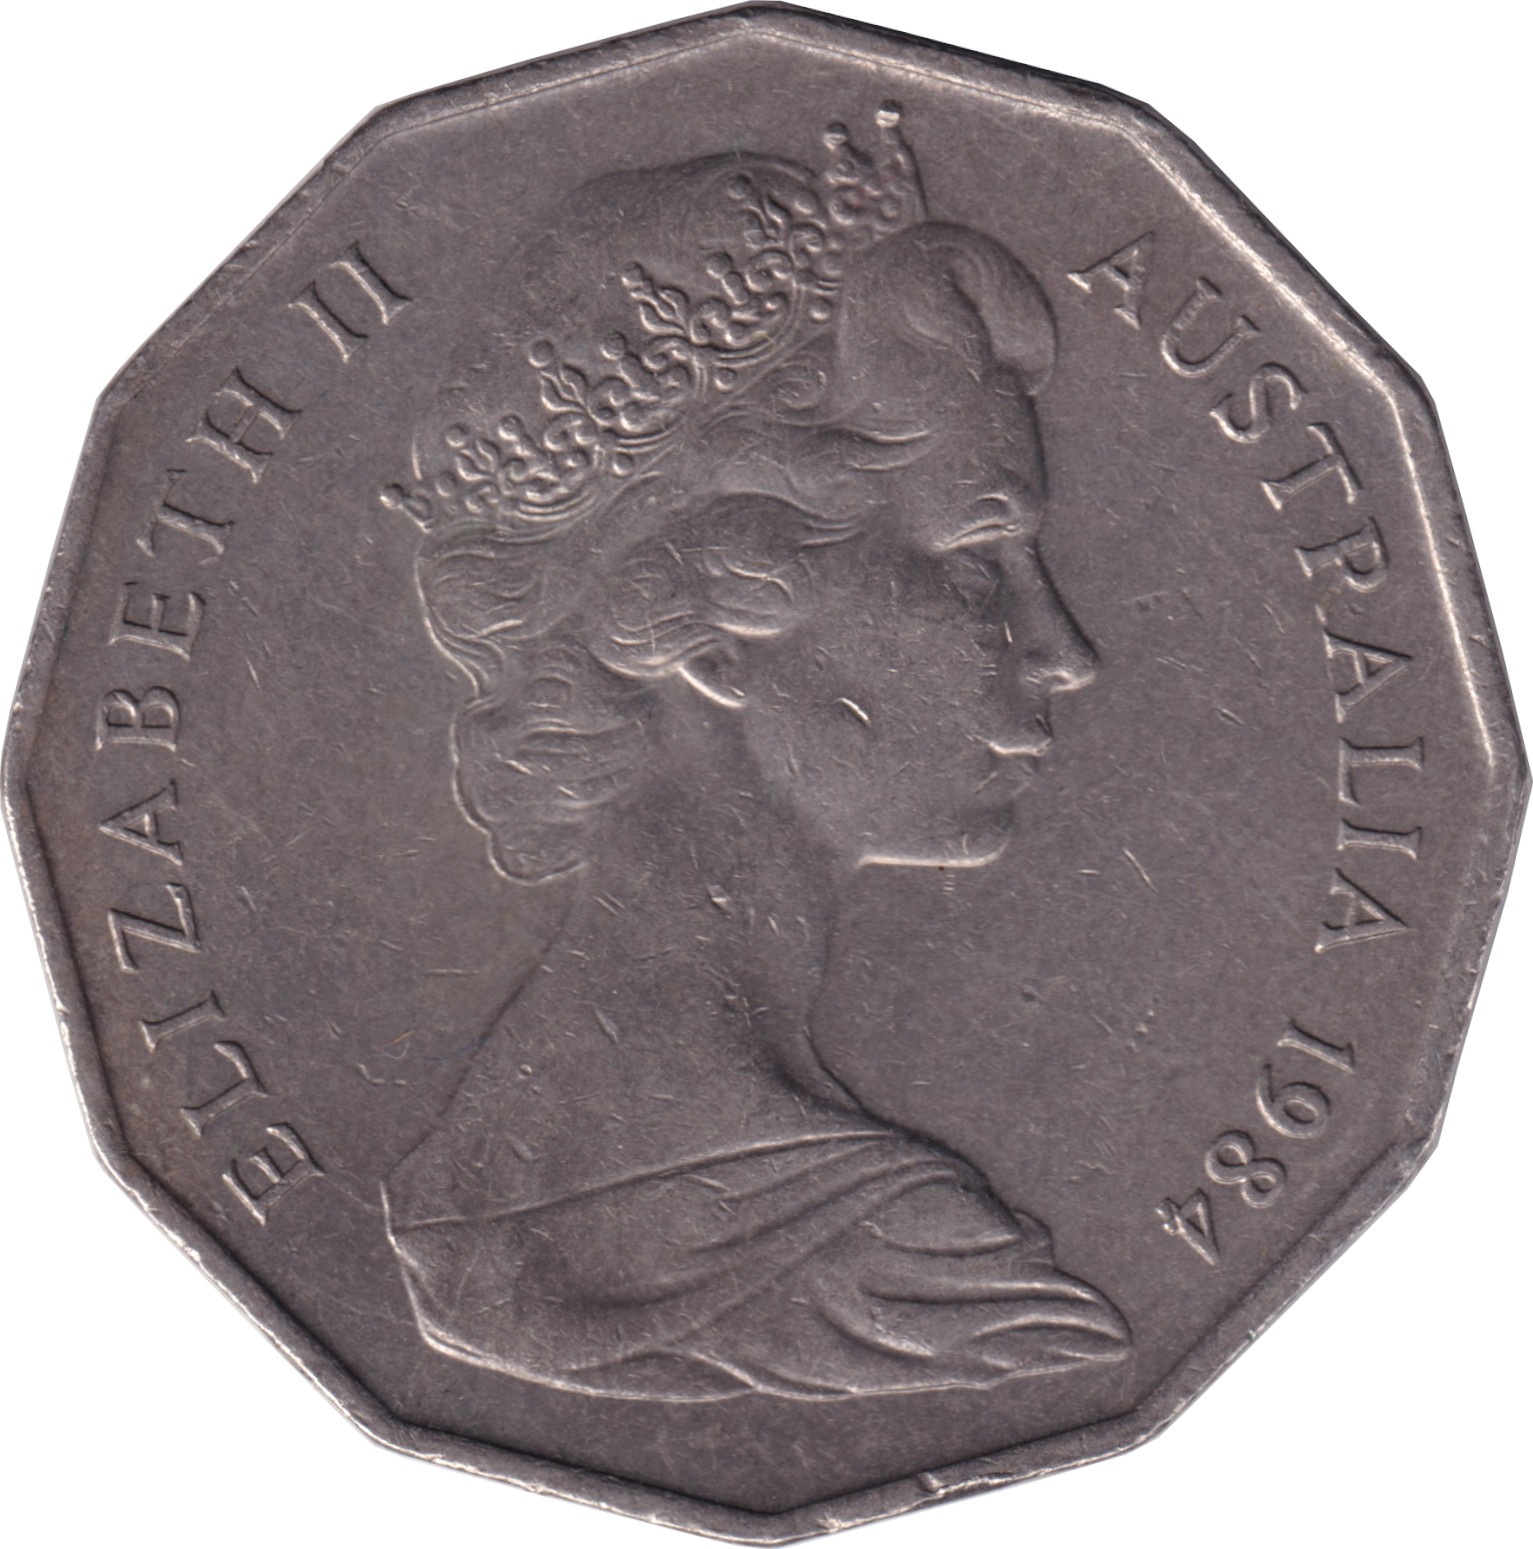 50 cents - Elizabeth II - Buste mature